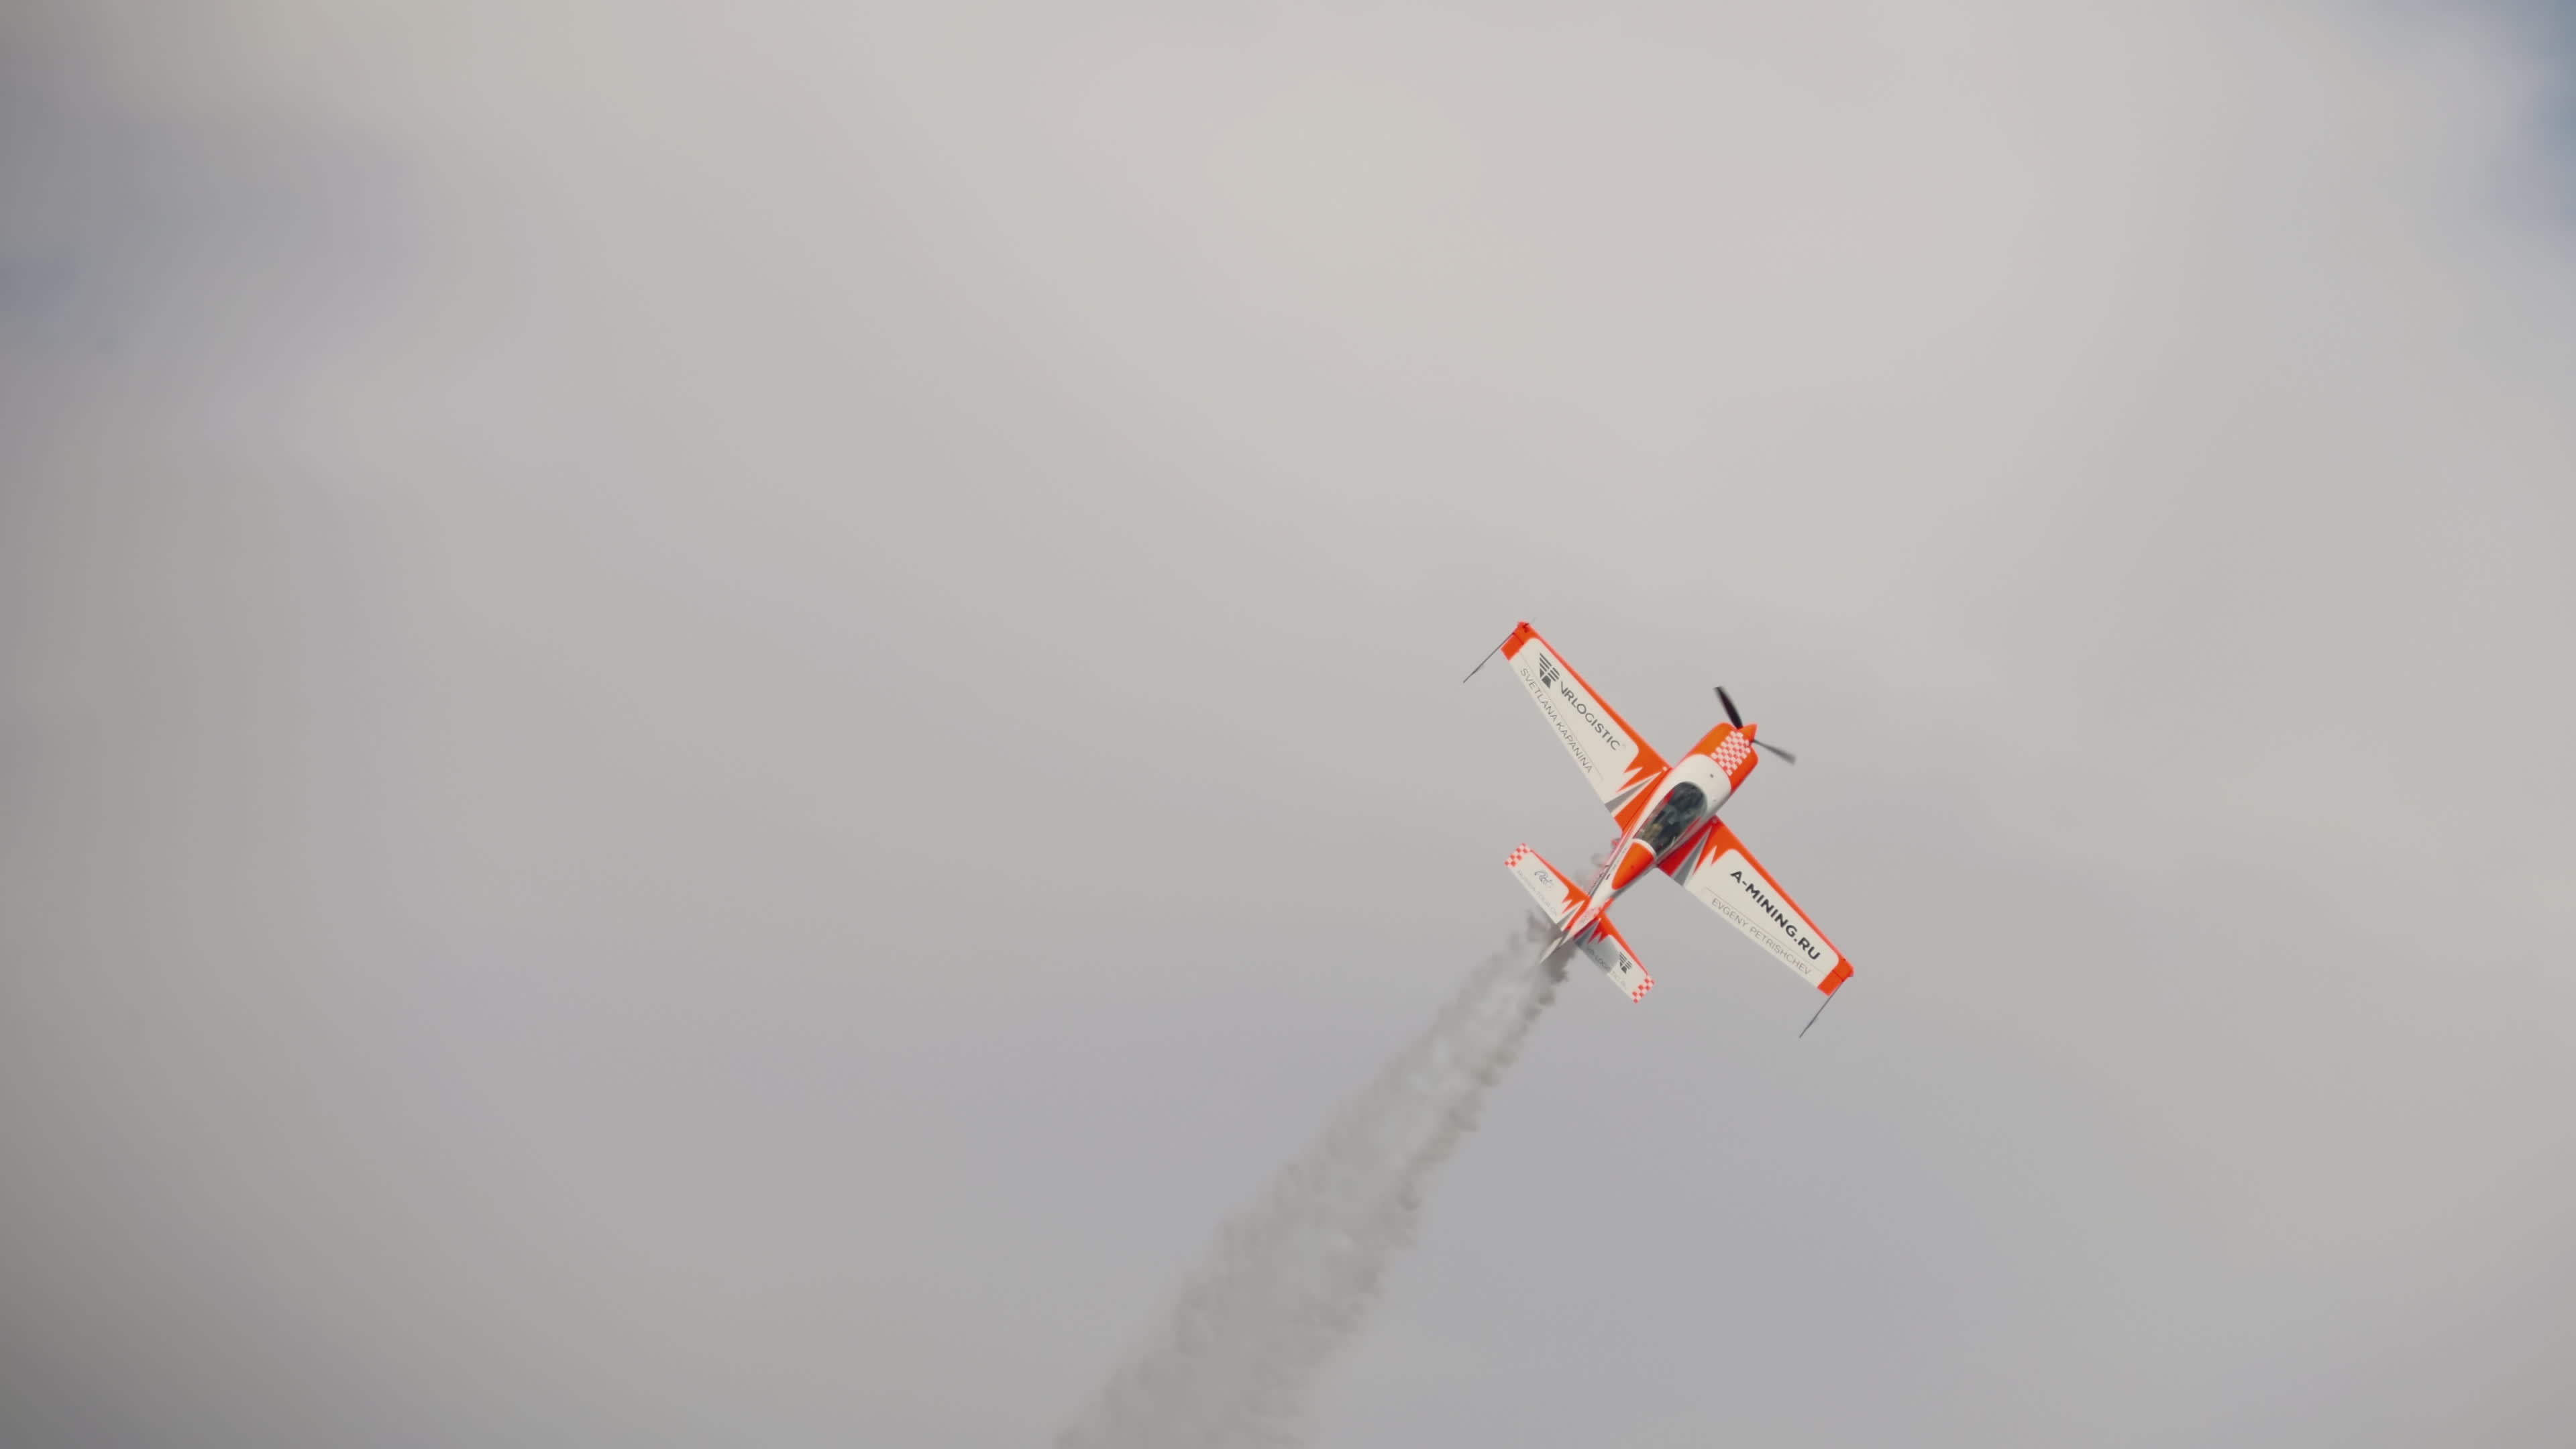 Air Sports: World champion performs aerobatics in the sky. 3840x2160 4K Wallpaper.